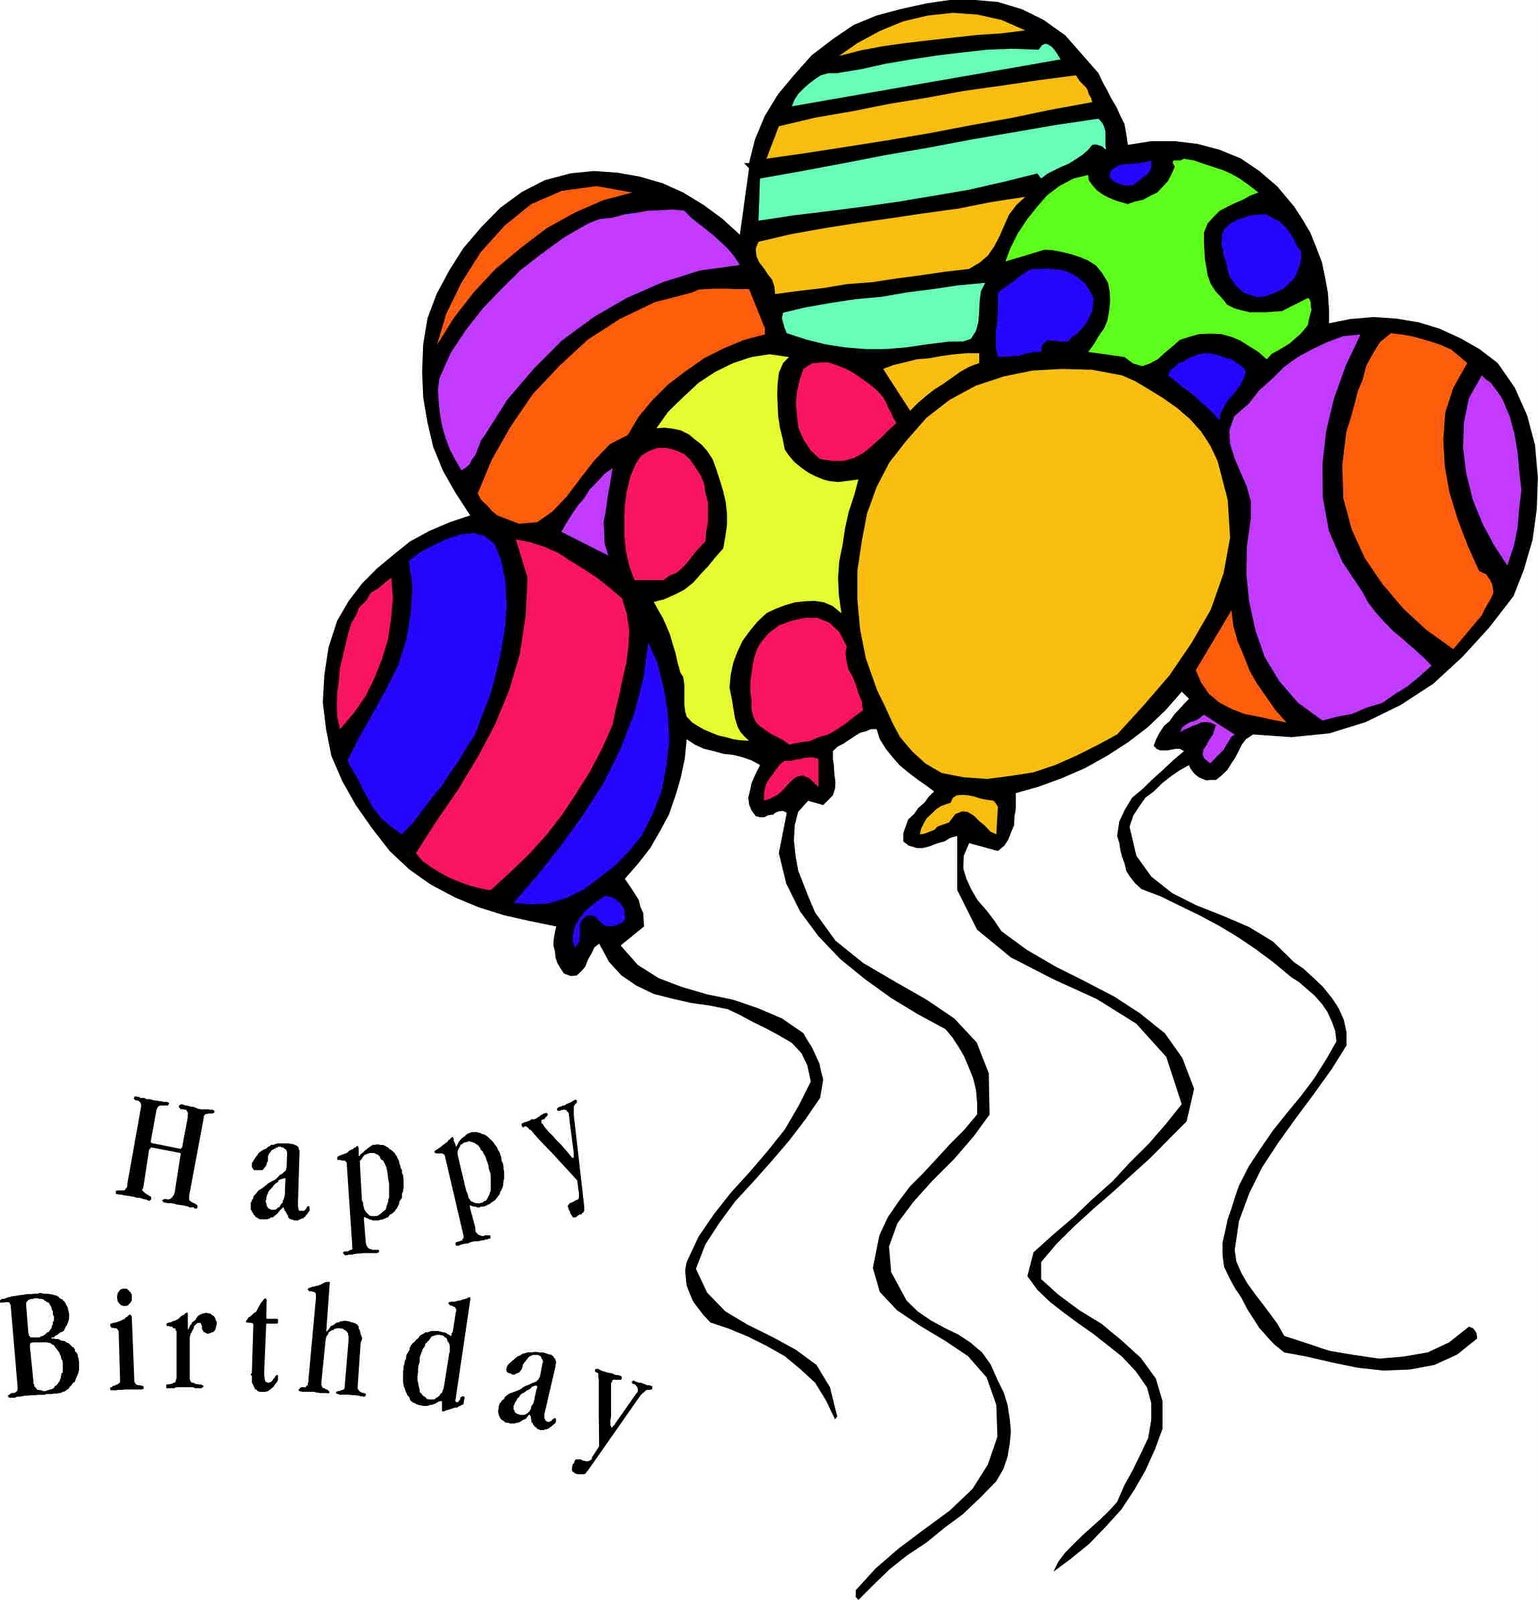 Birthday Balloons Clip Art - ClipArt Best